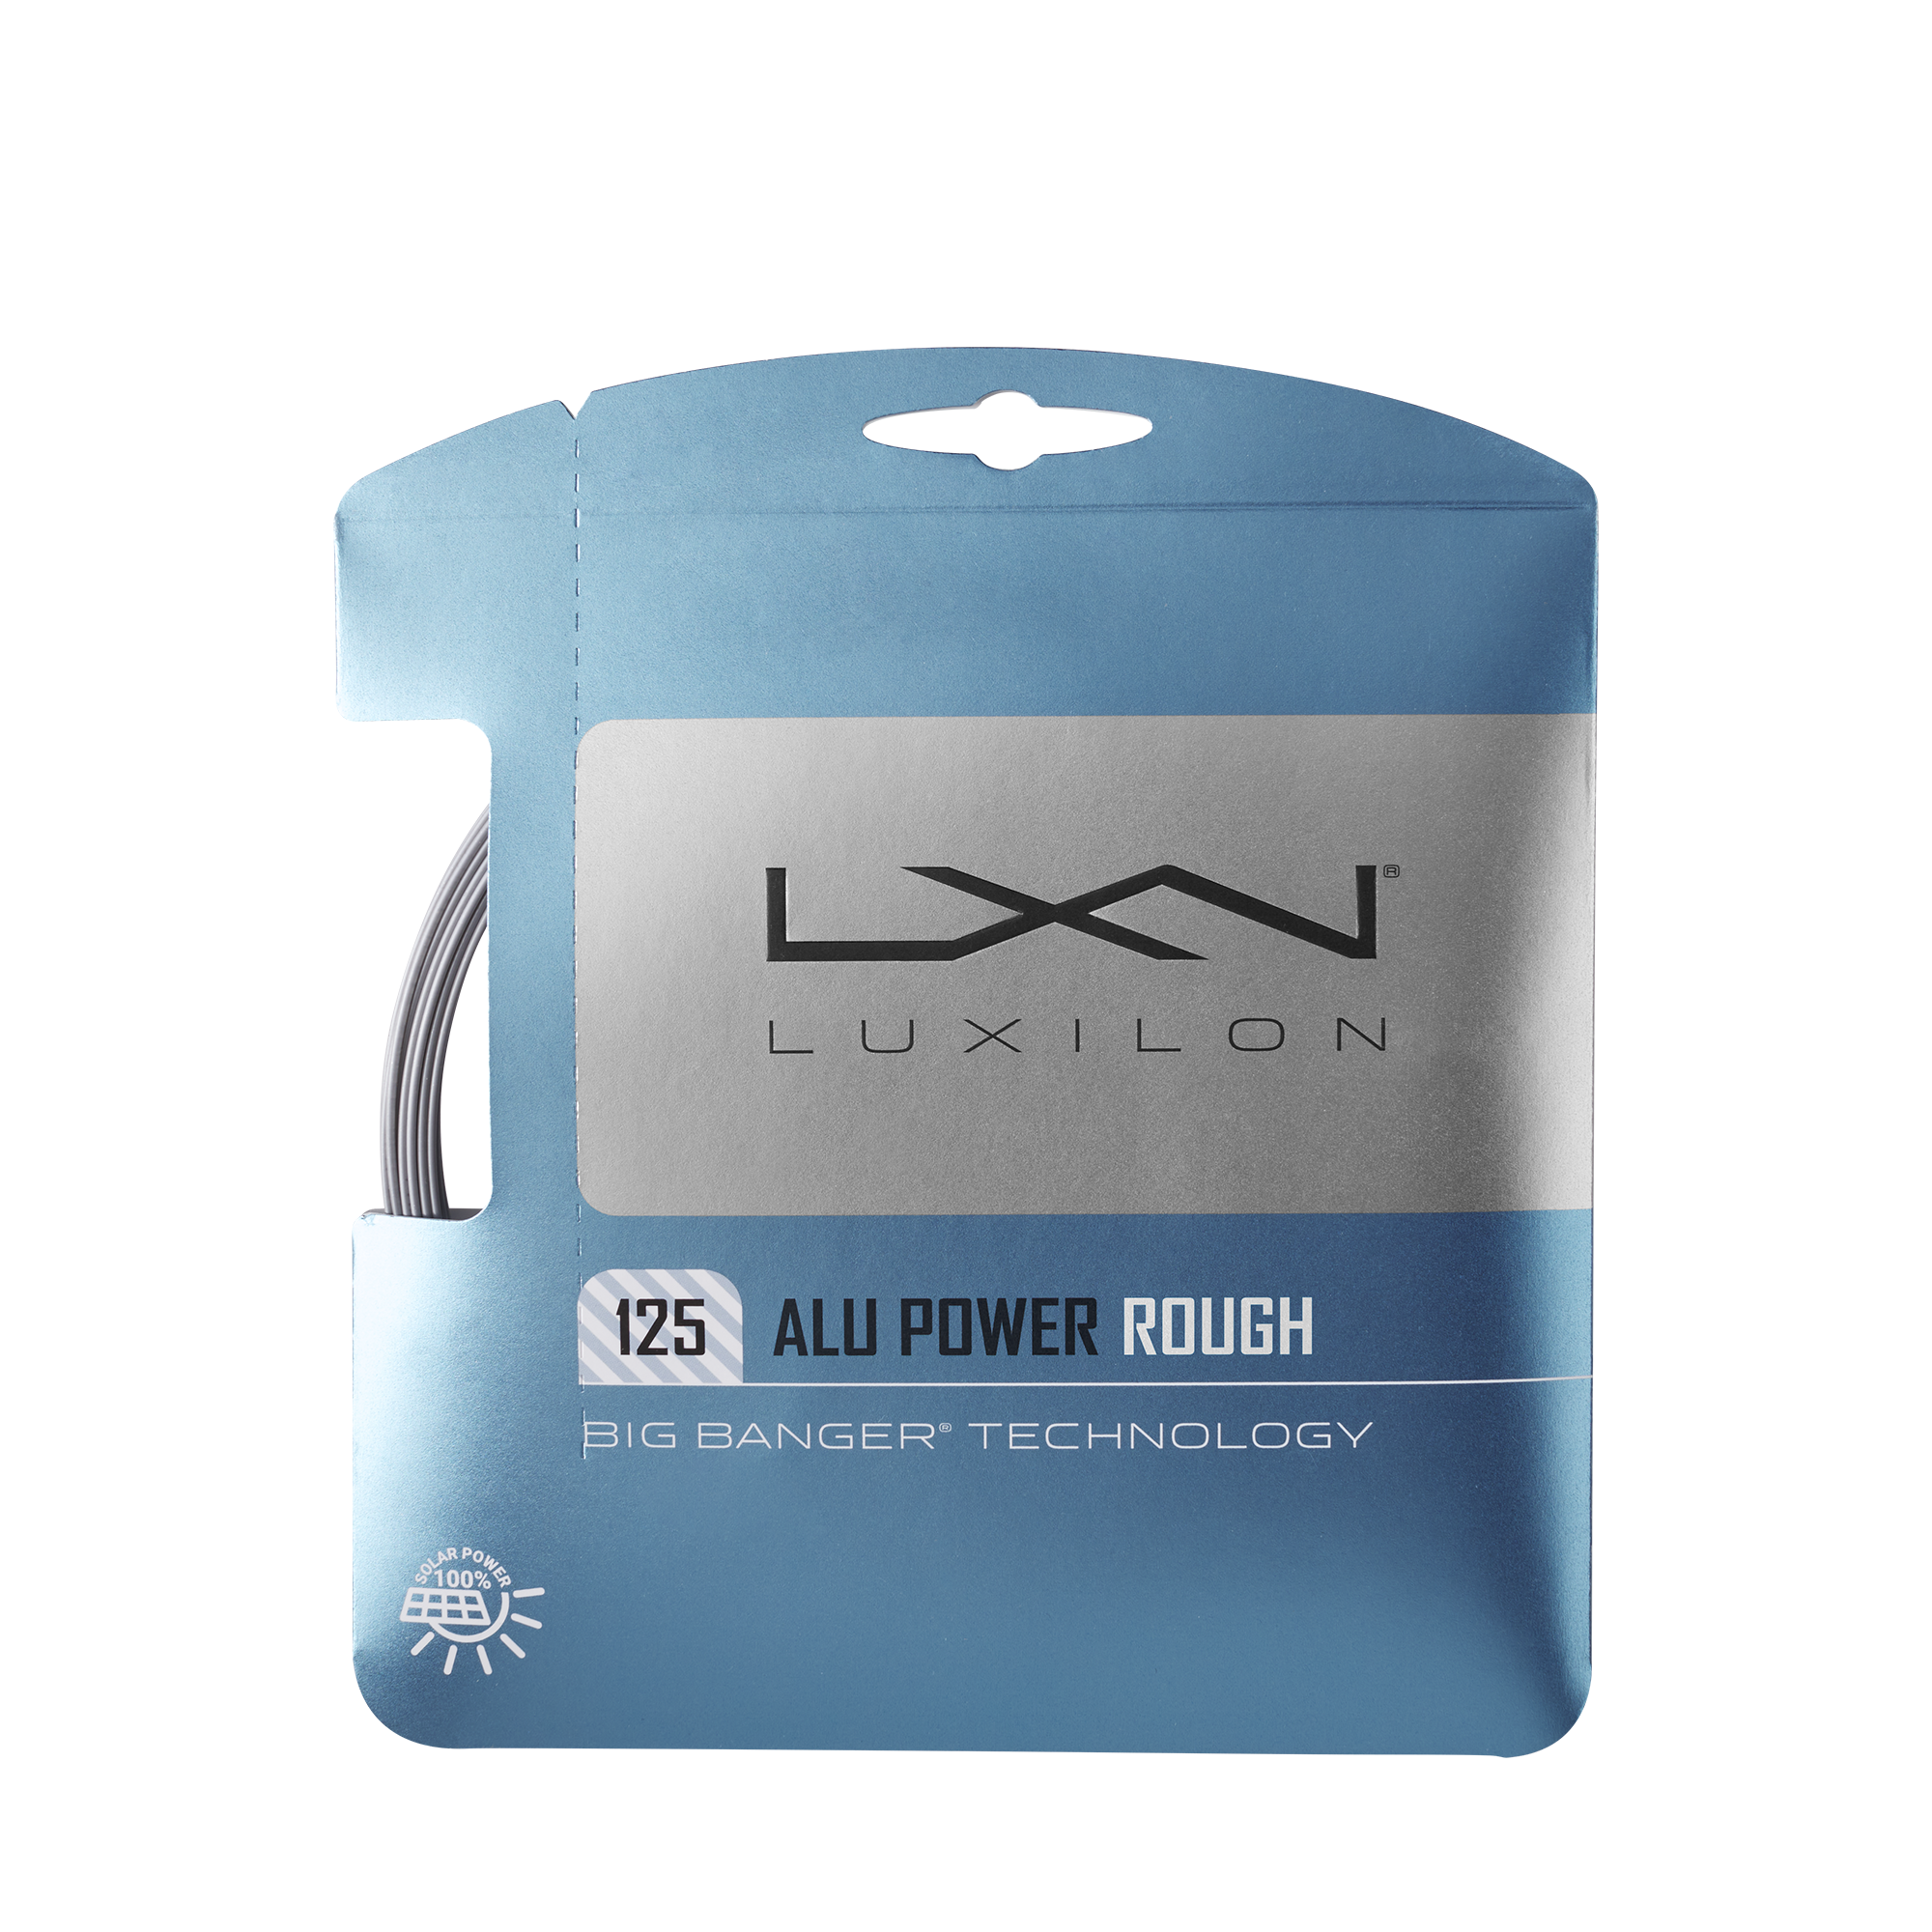 Luxilon Alu Power Rough 125 Pack - Silver